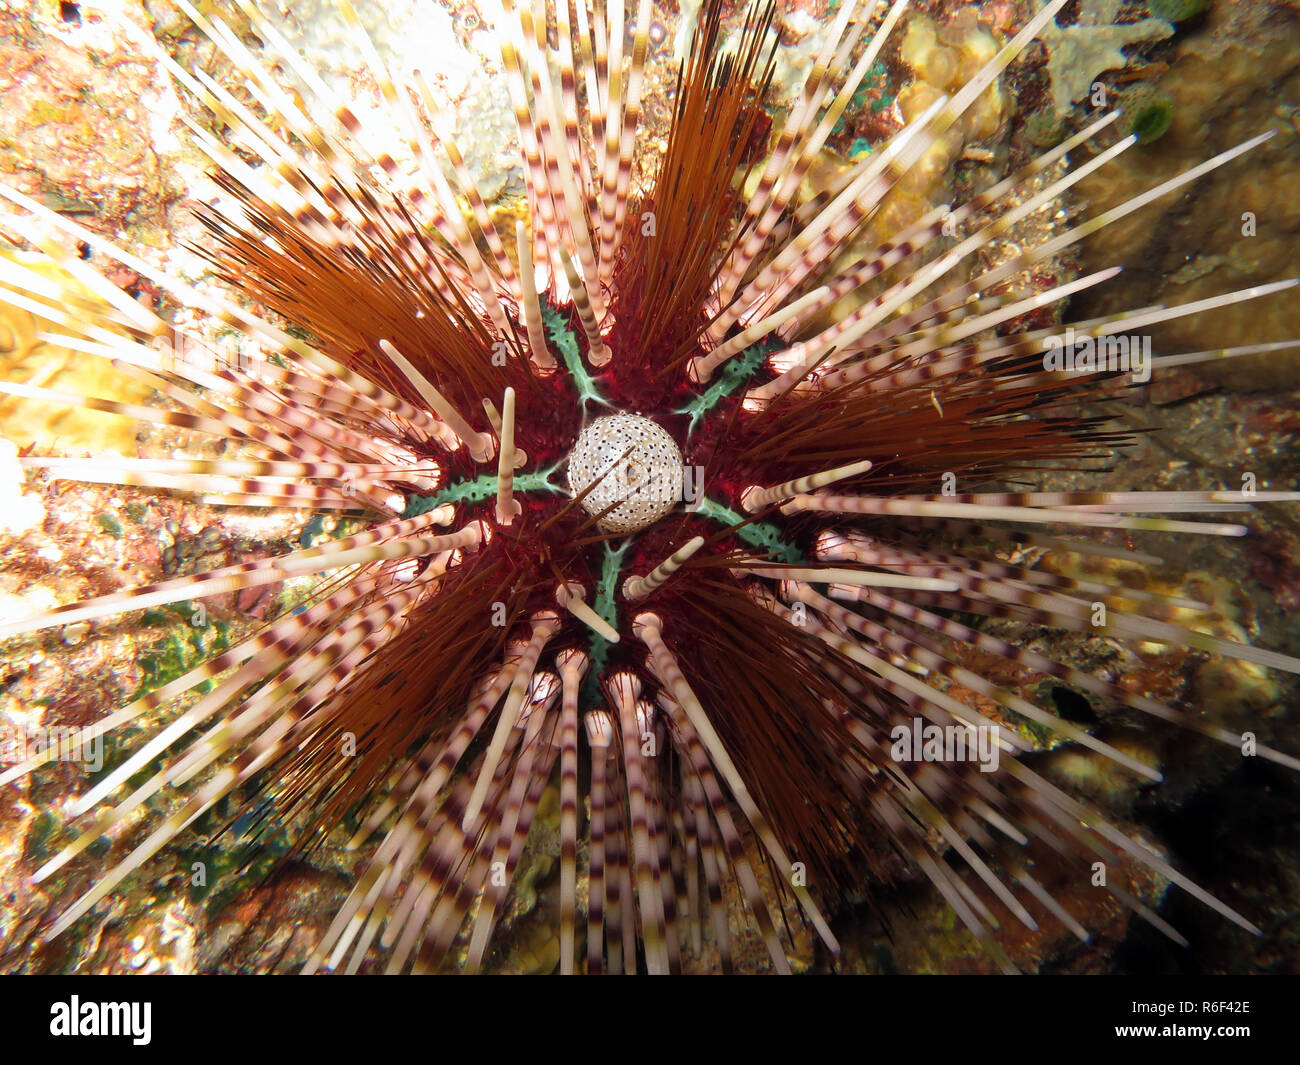 Matita tiara ricci di mare echinothrix calamaris Foto Stock